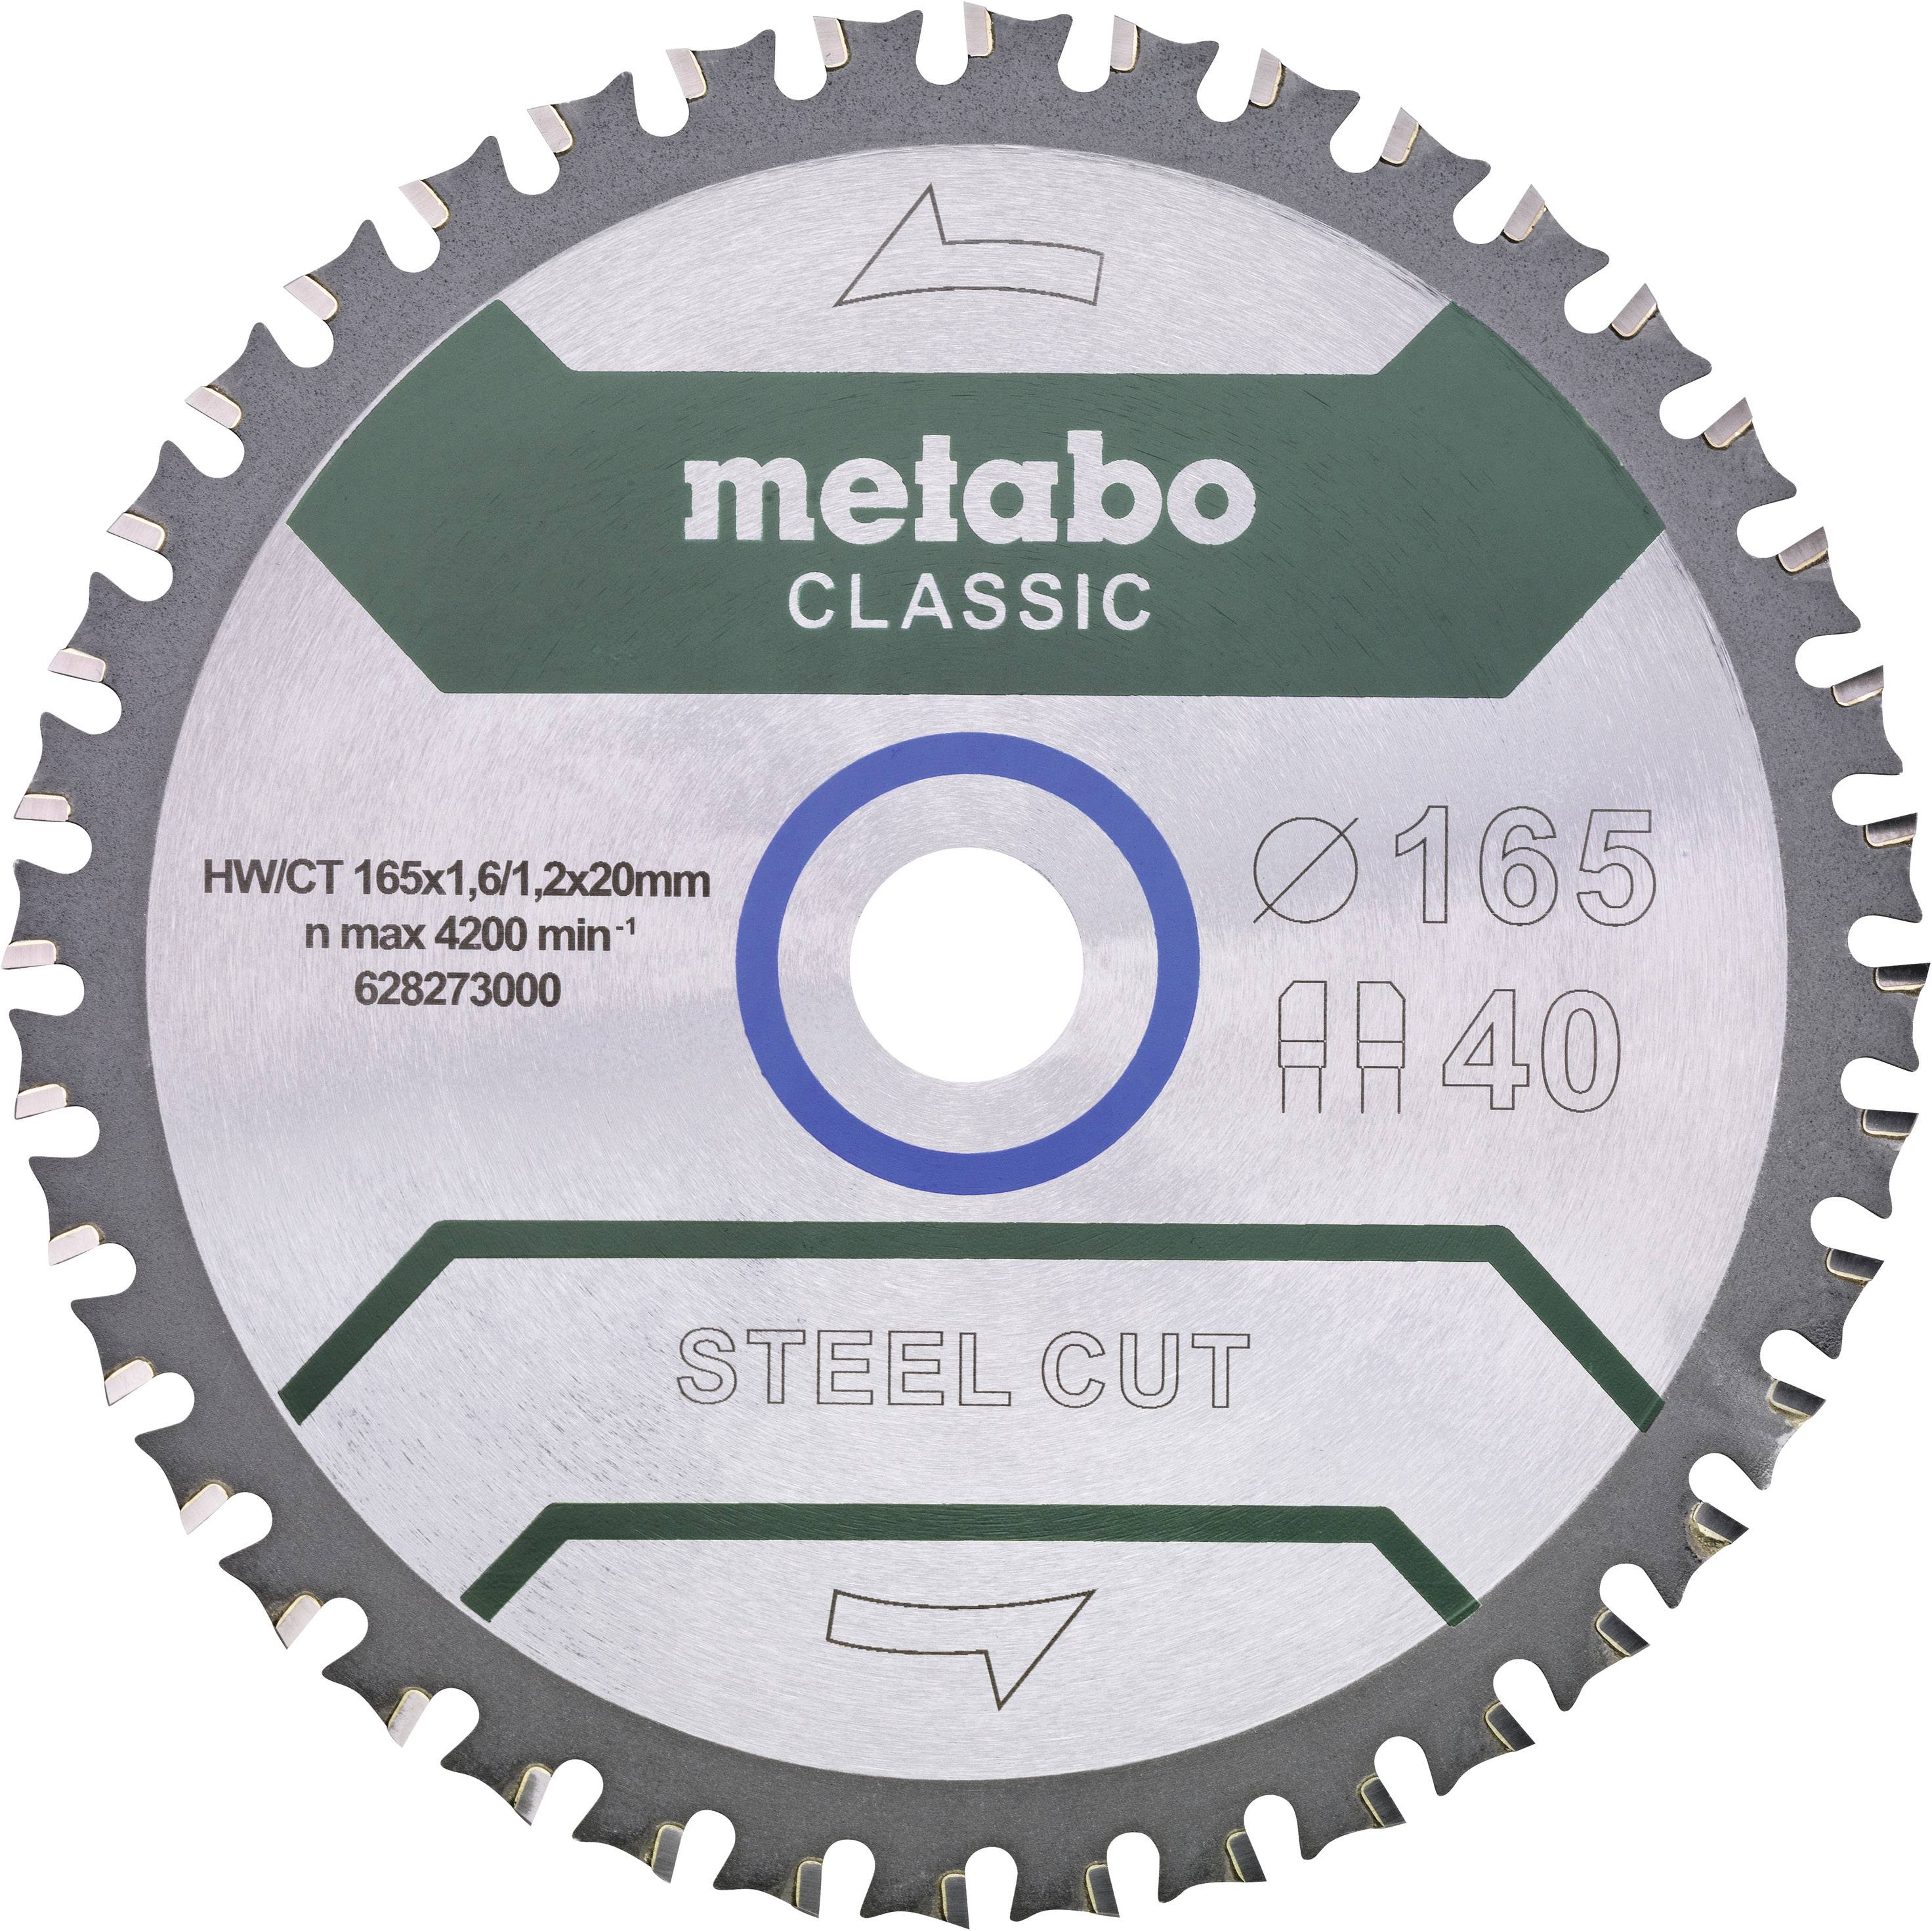 METABO Kreissägeblatt Steel Cut Classic Metabo 628273000 Durchmesser:165 mm Zähneanzahl:40 Dicke:1.6